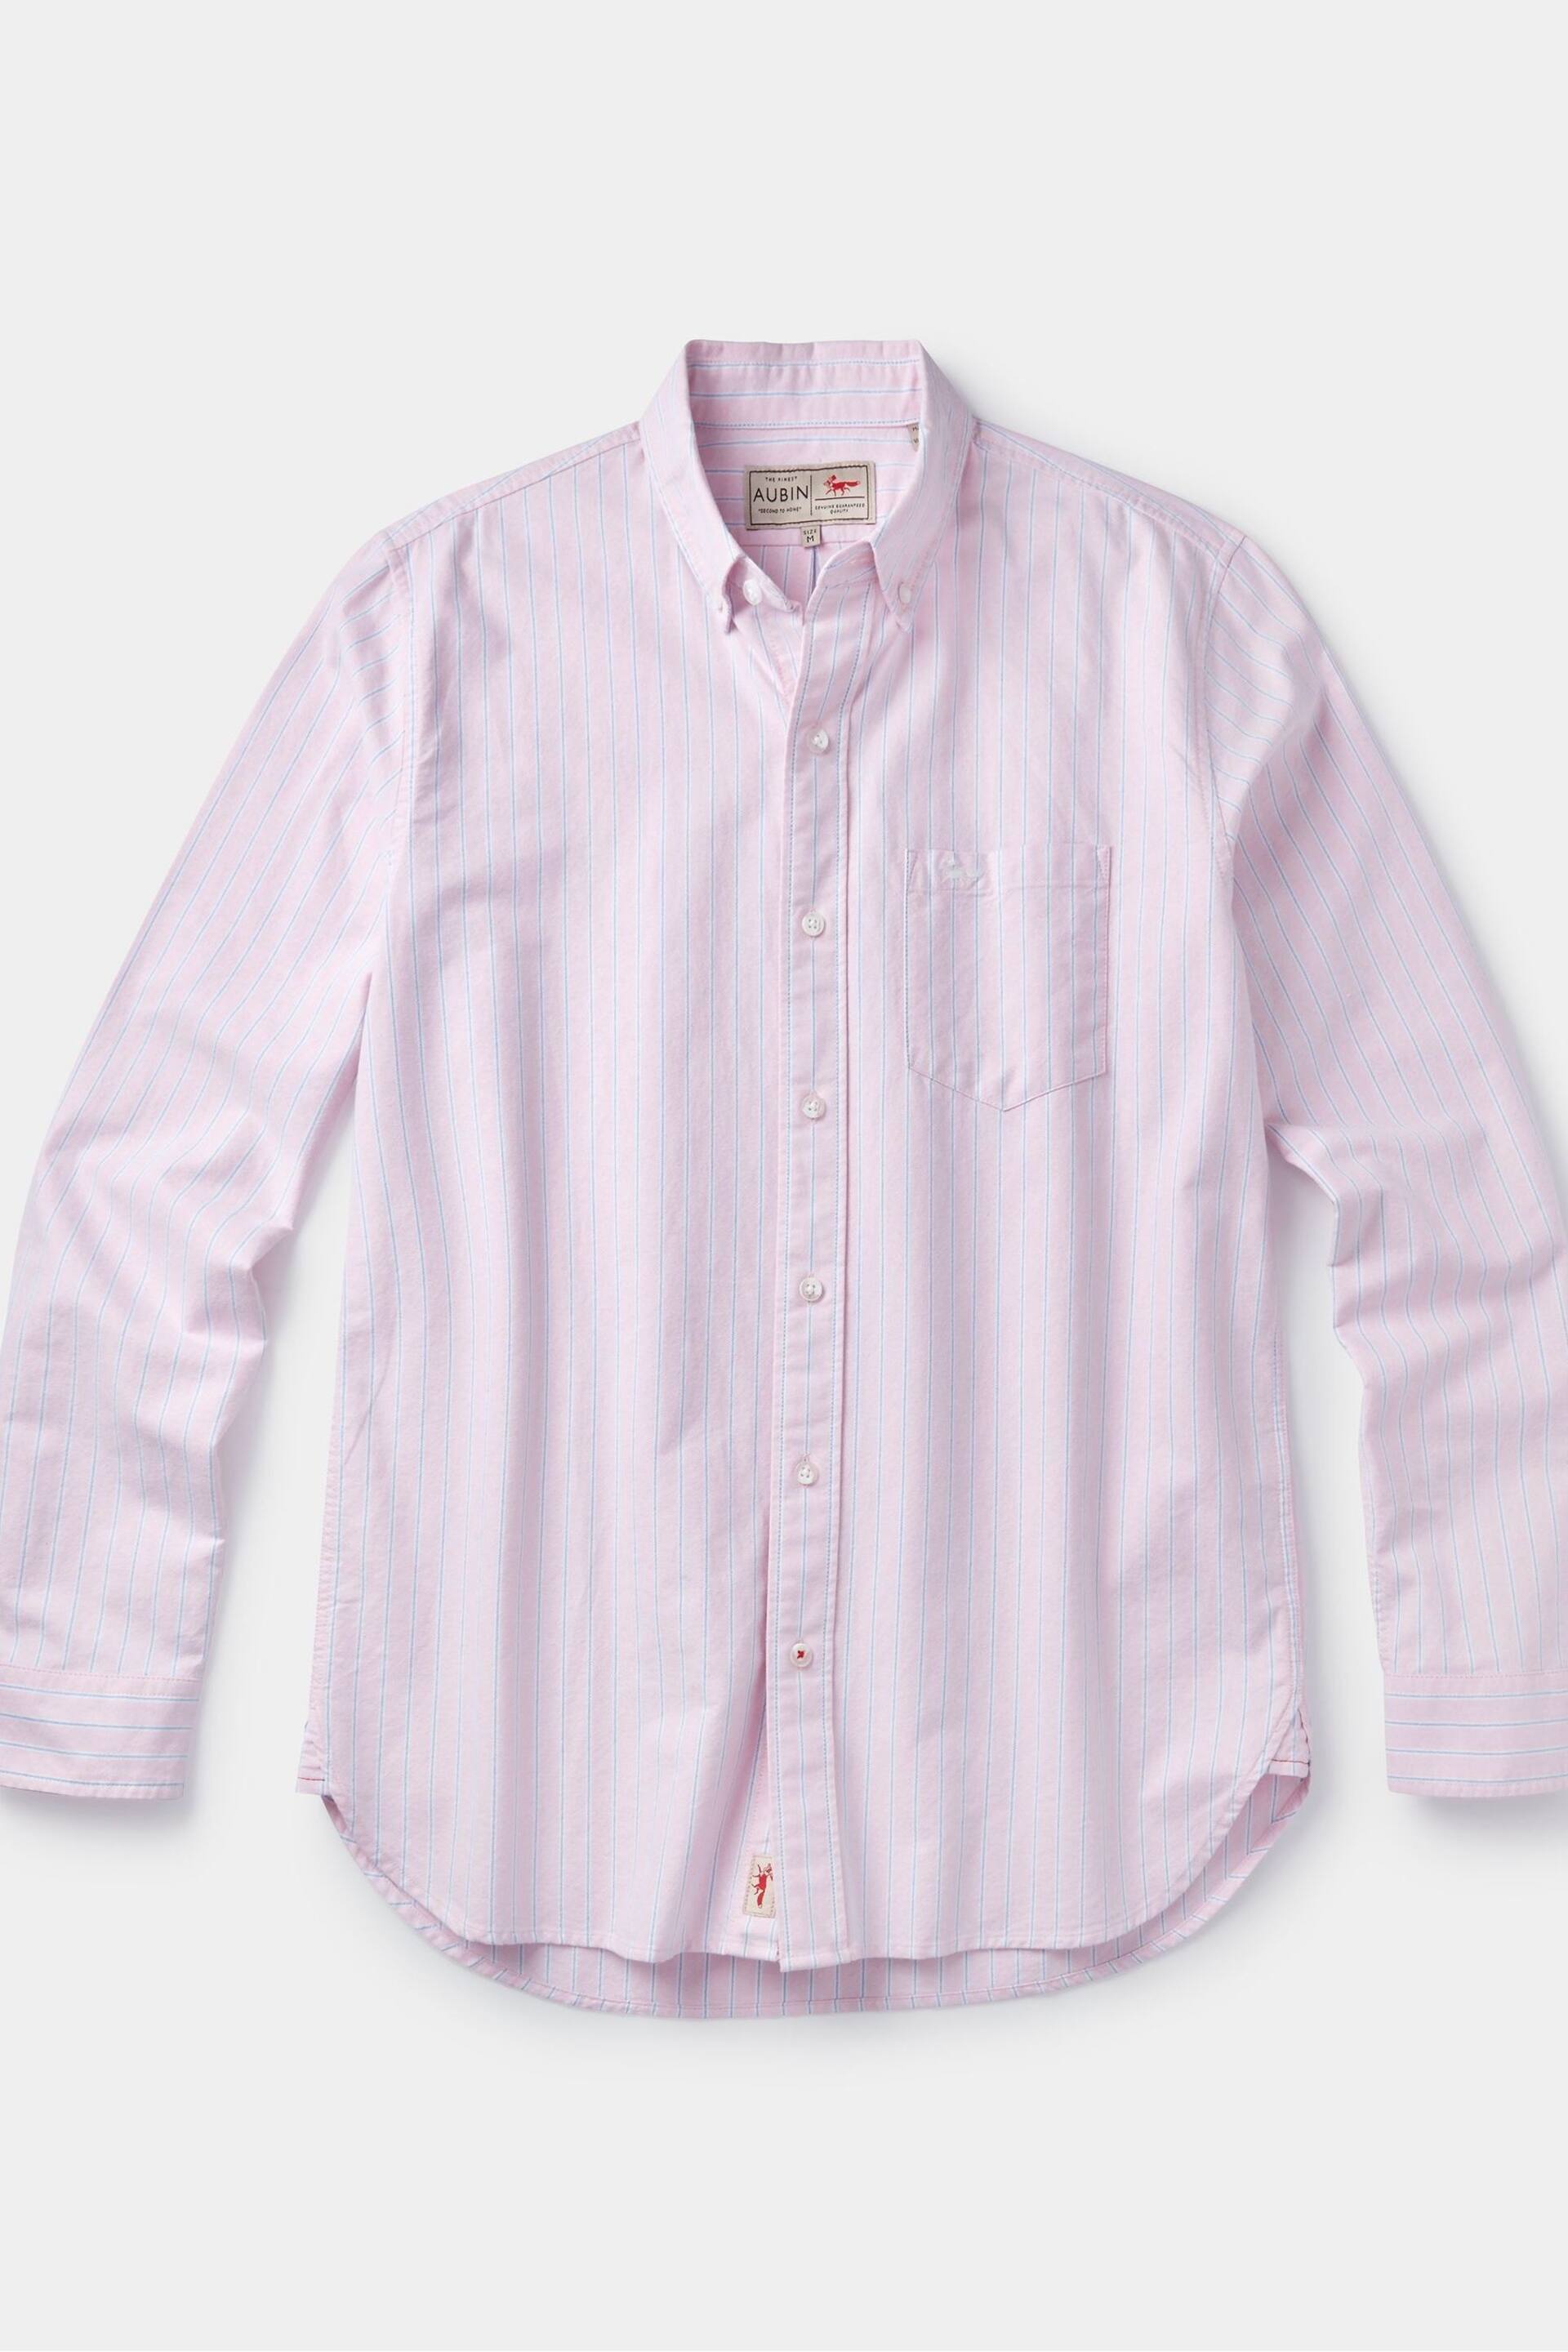 Aubin Aldridge Oxford Button Down Shirt - Image 7 of 8